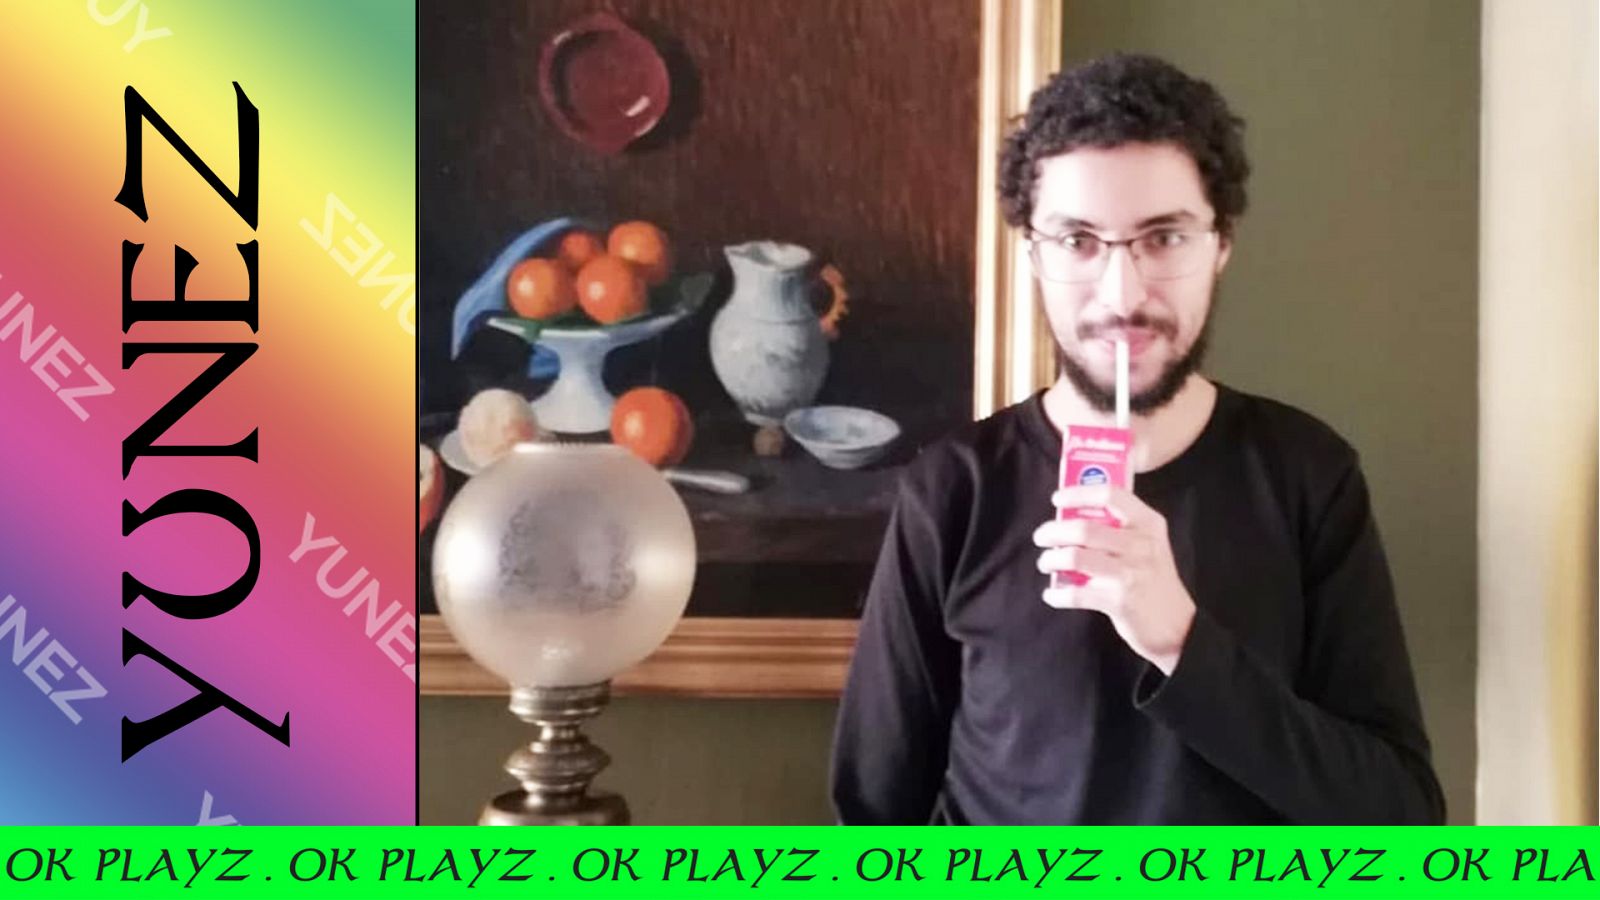 OK Playz - Yunez nos pone a prueba con las "fake news"